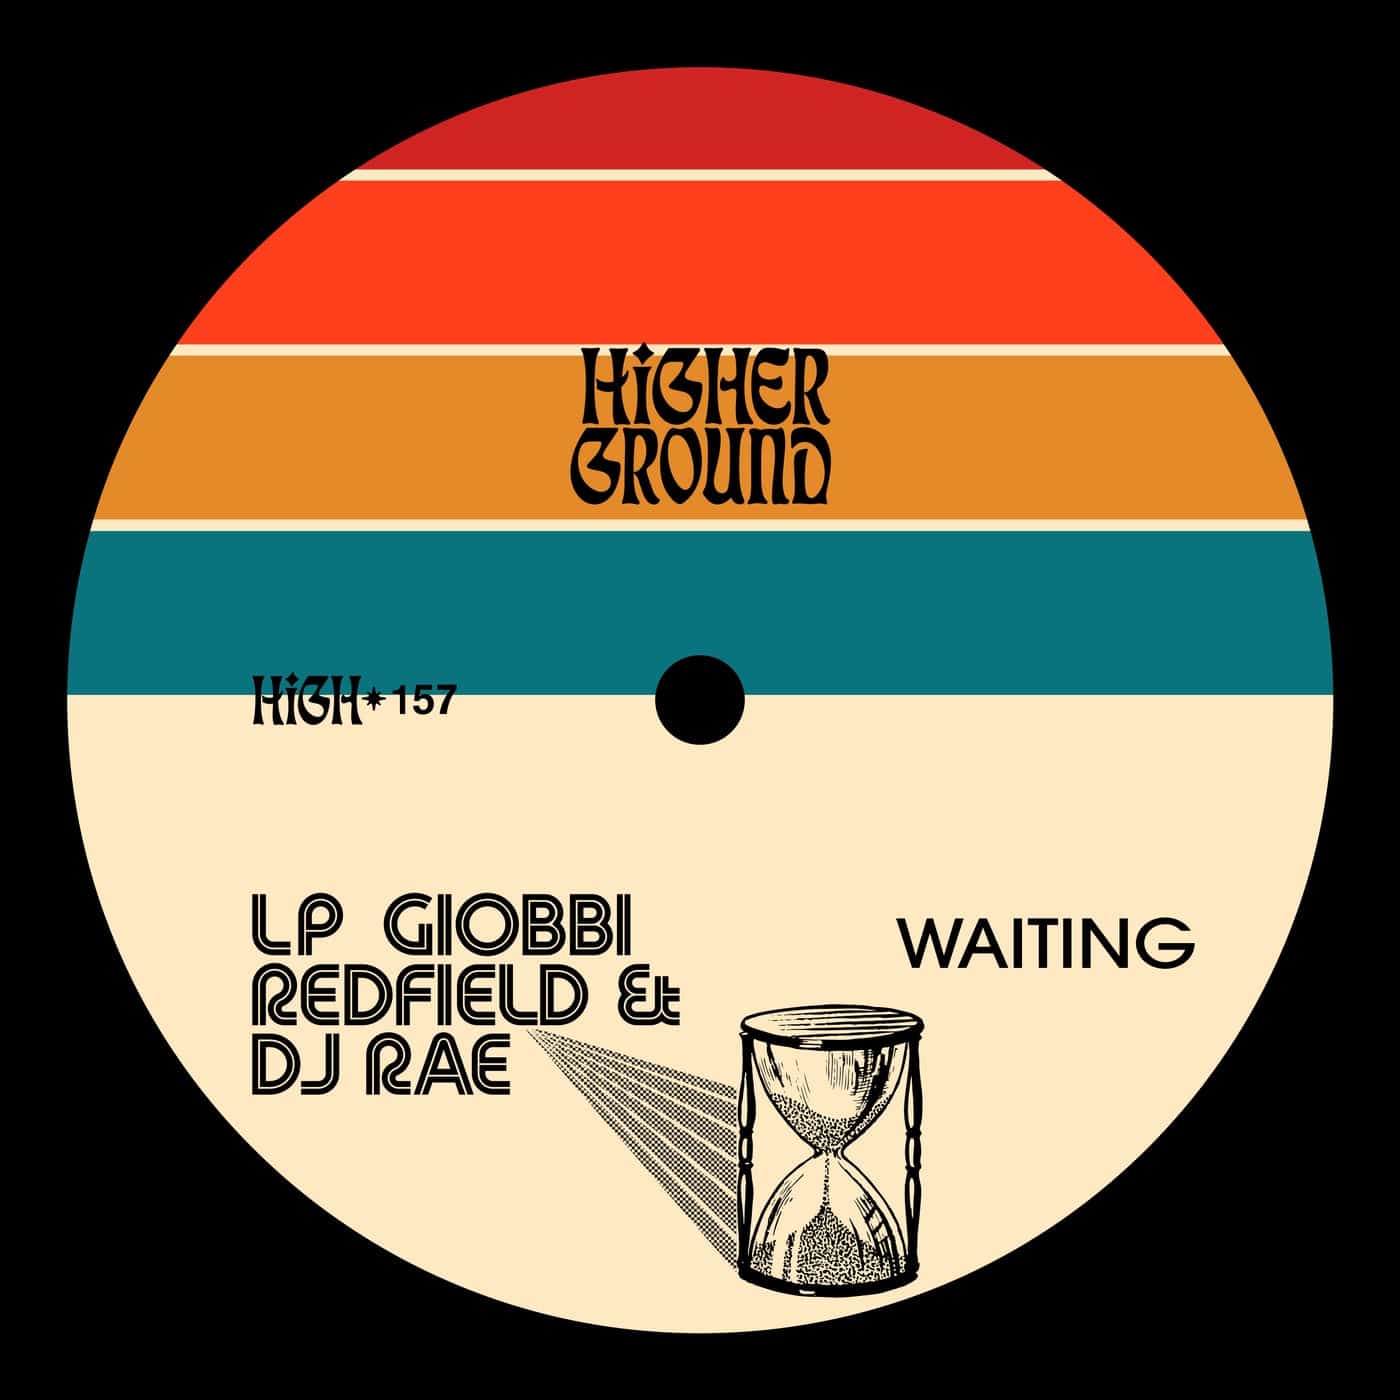 image cover: Redfield, DJ Rae, LP Giobbi - Waiting on Higher Ground